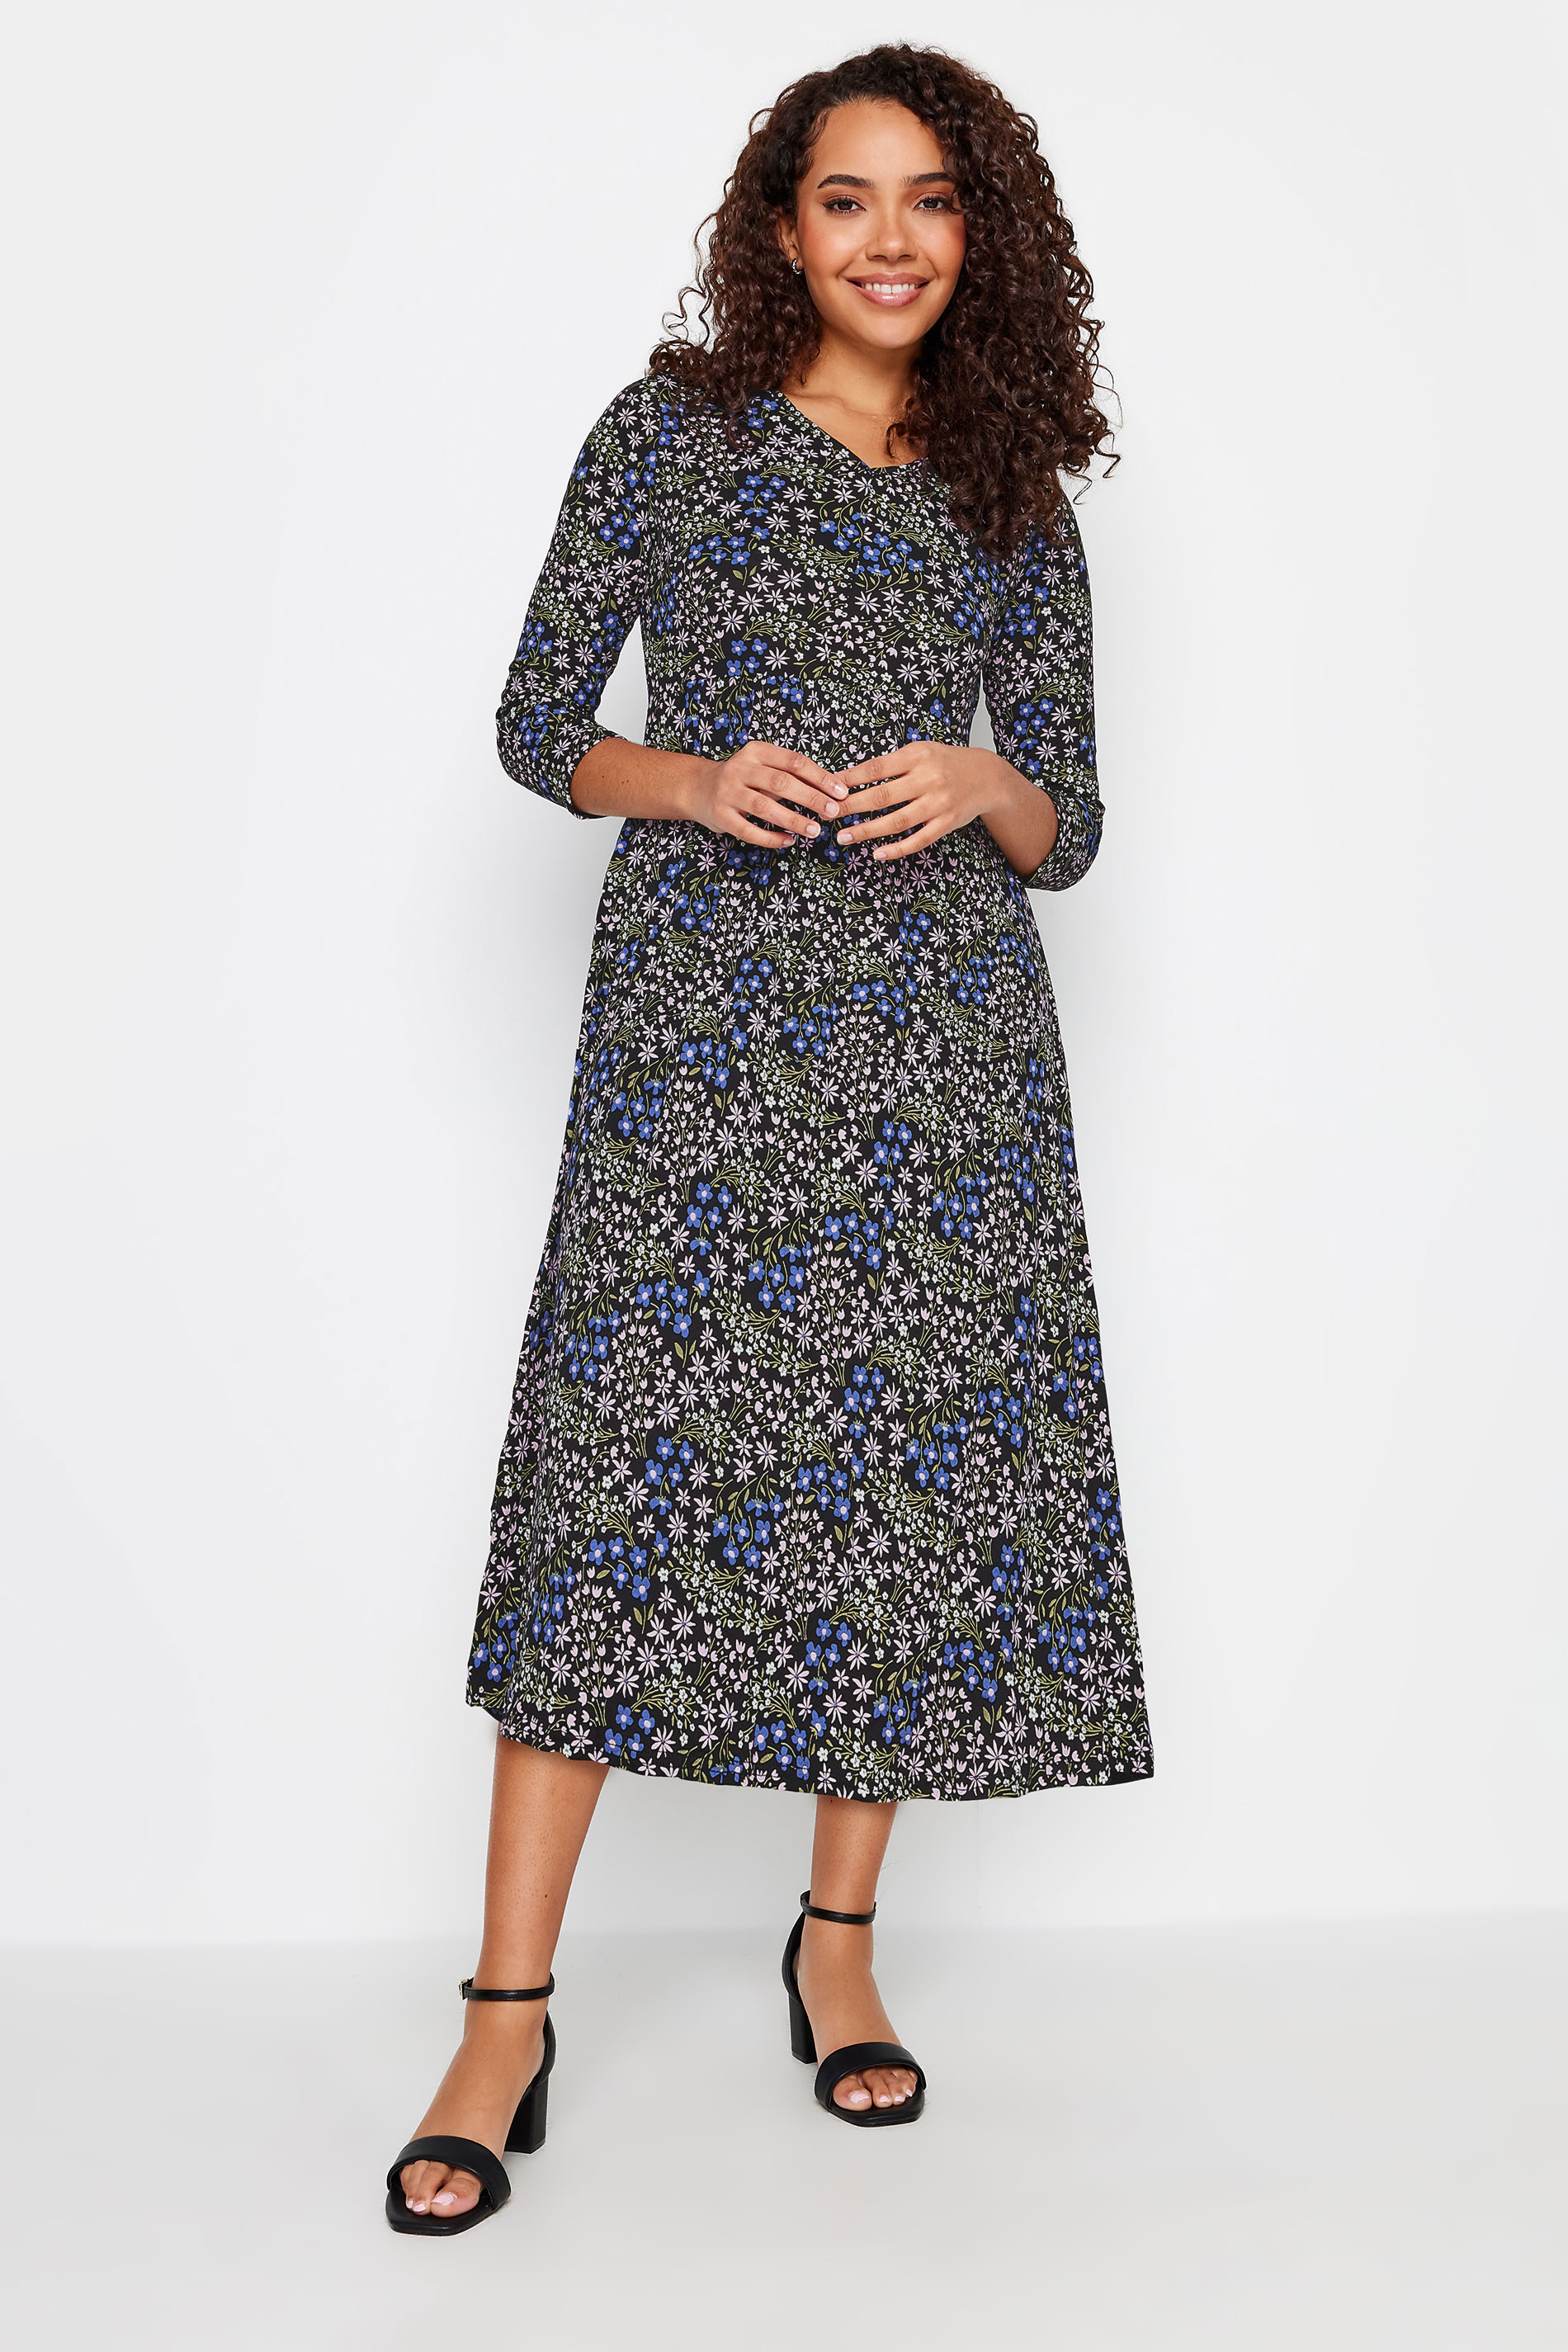 M&Co Petite Black Ditsy Floral Print Midi Dress | M&Co 1